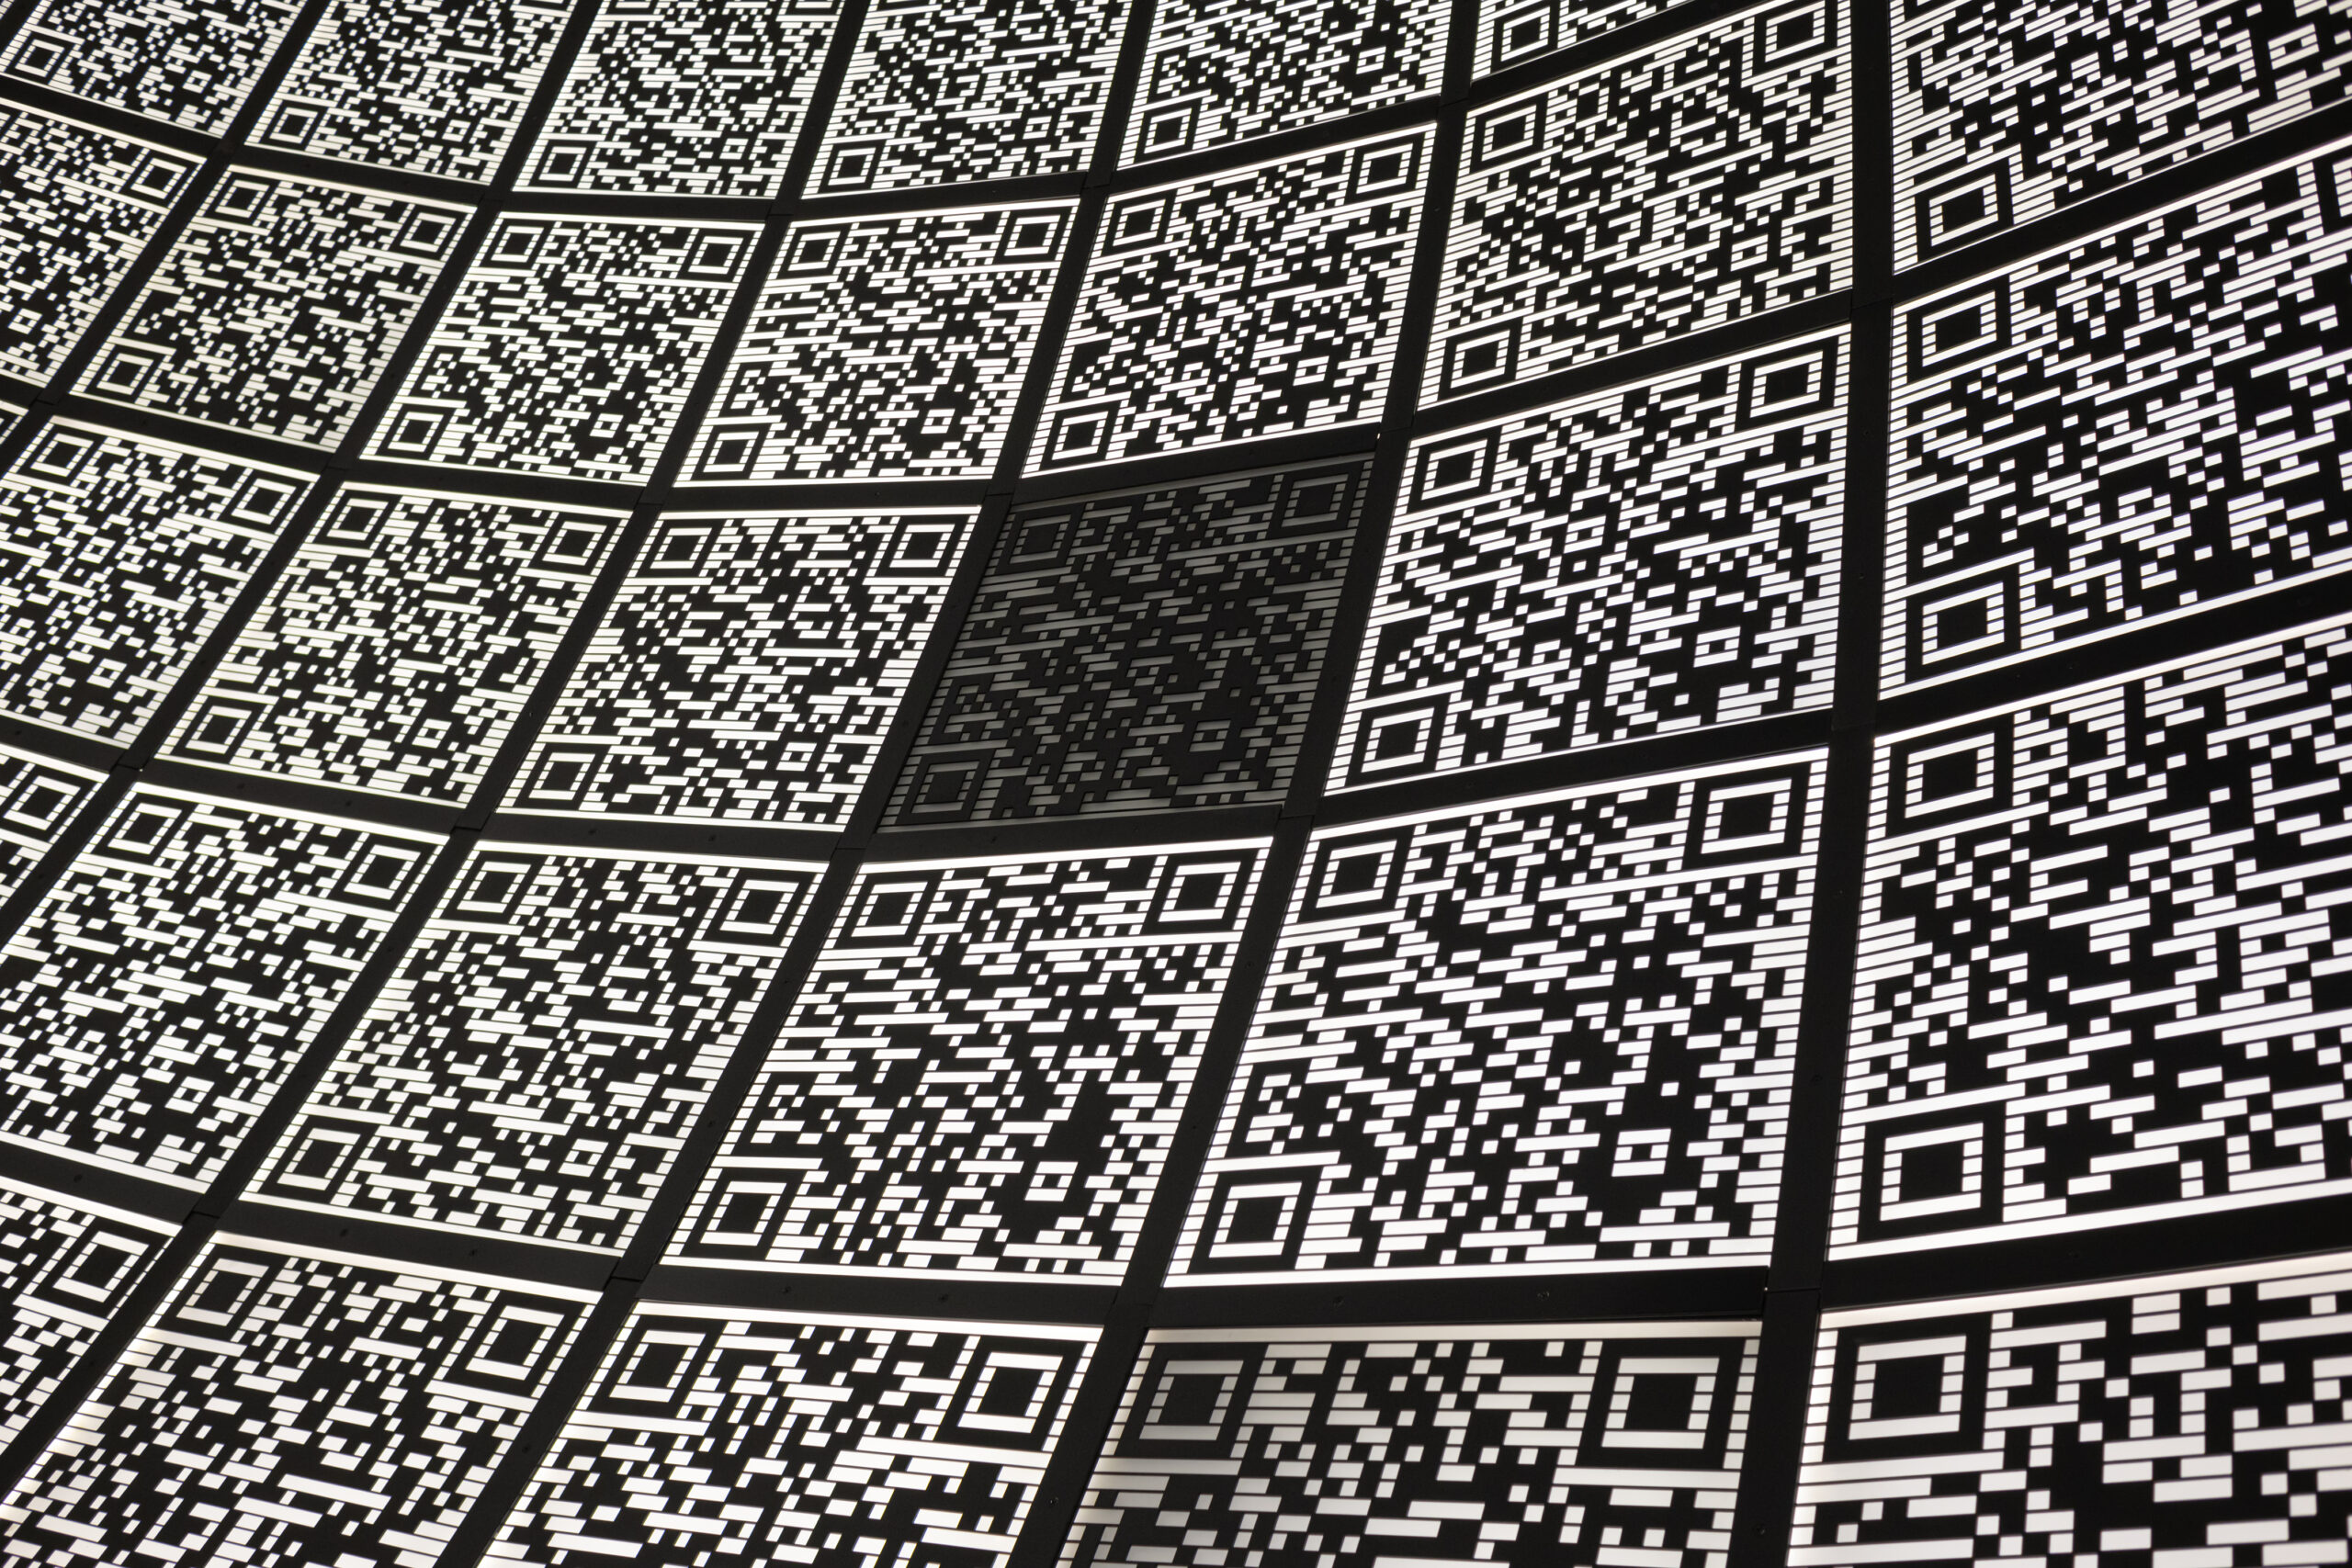 Illustrative image of QR codes on a black background